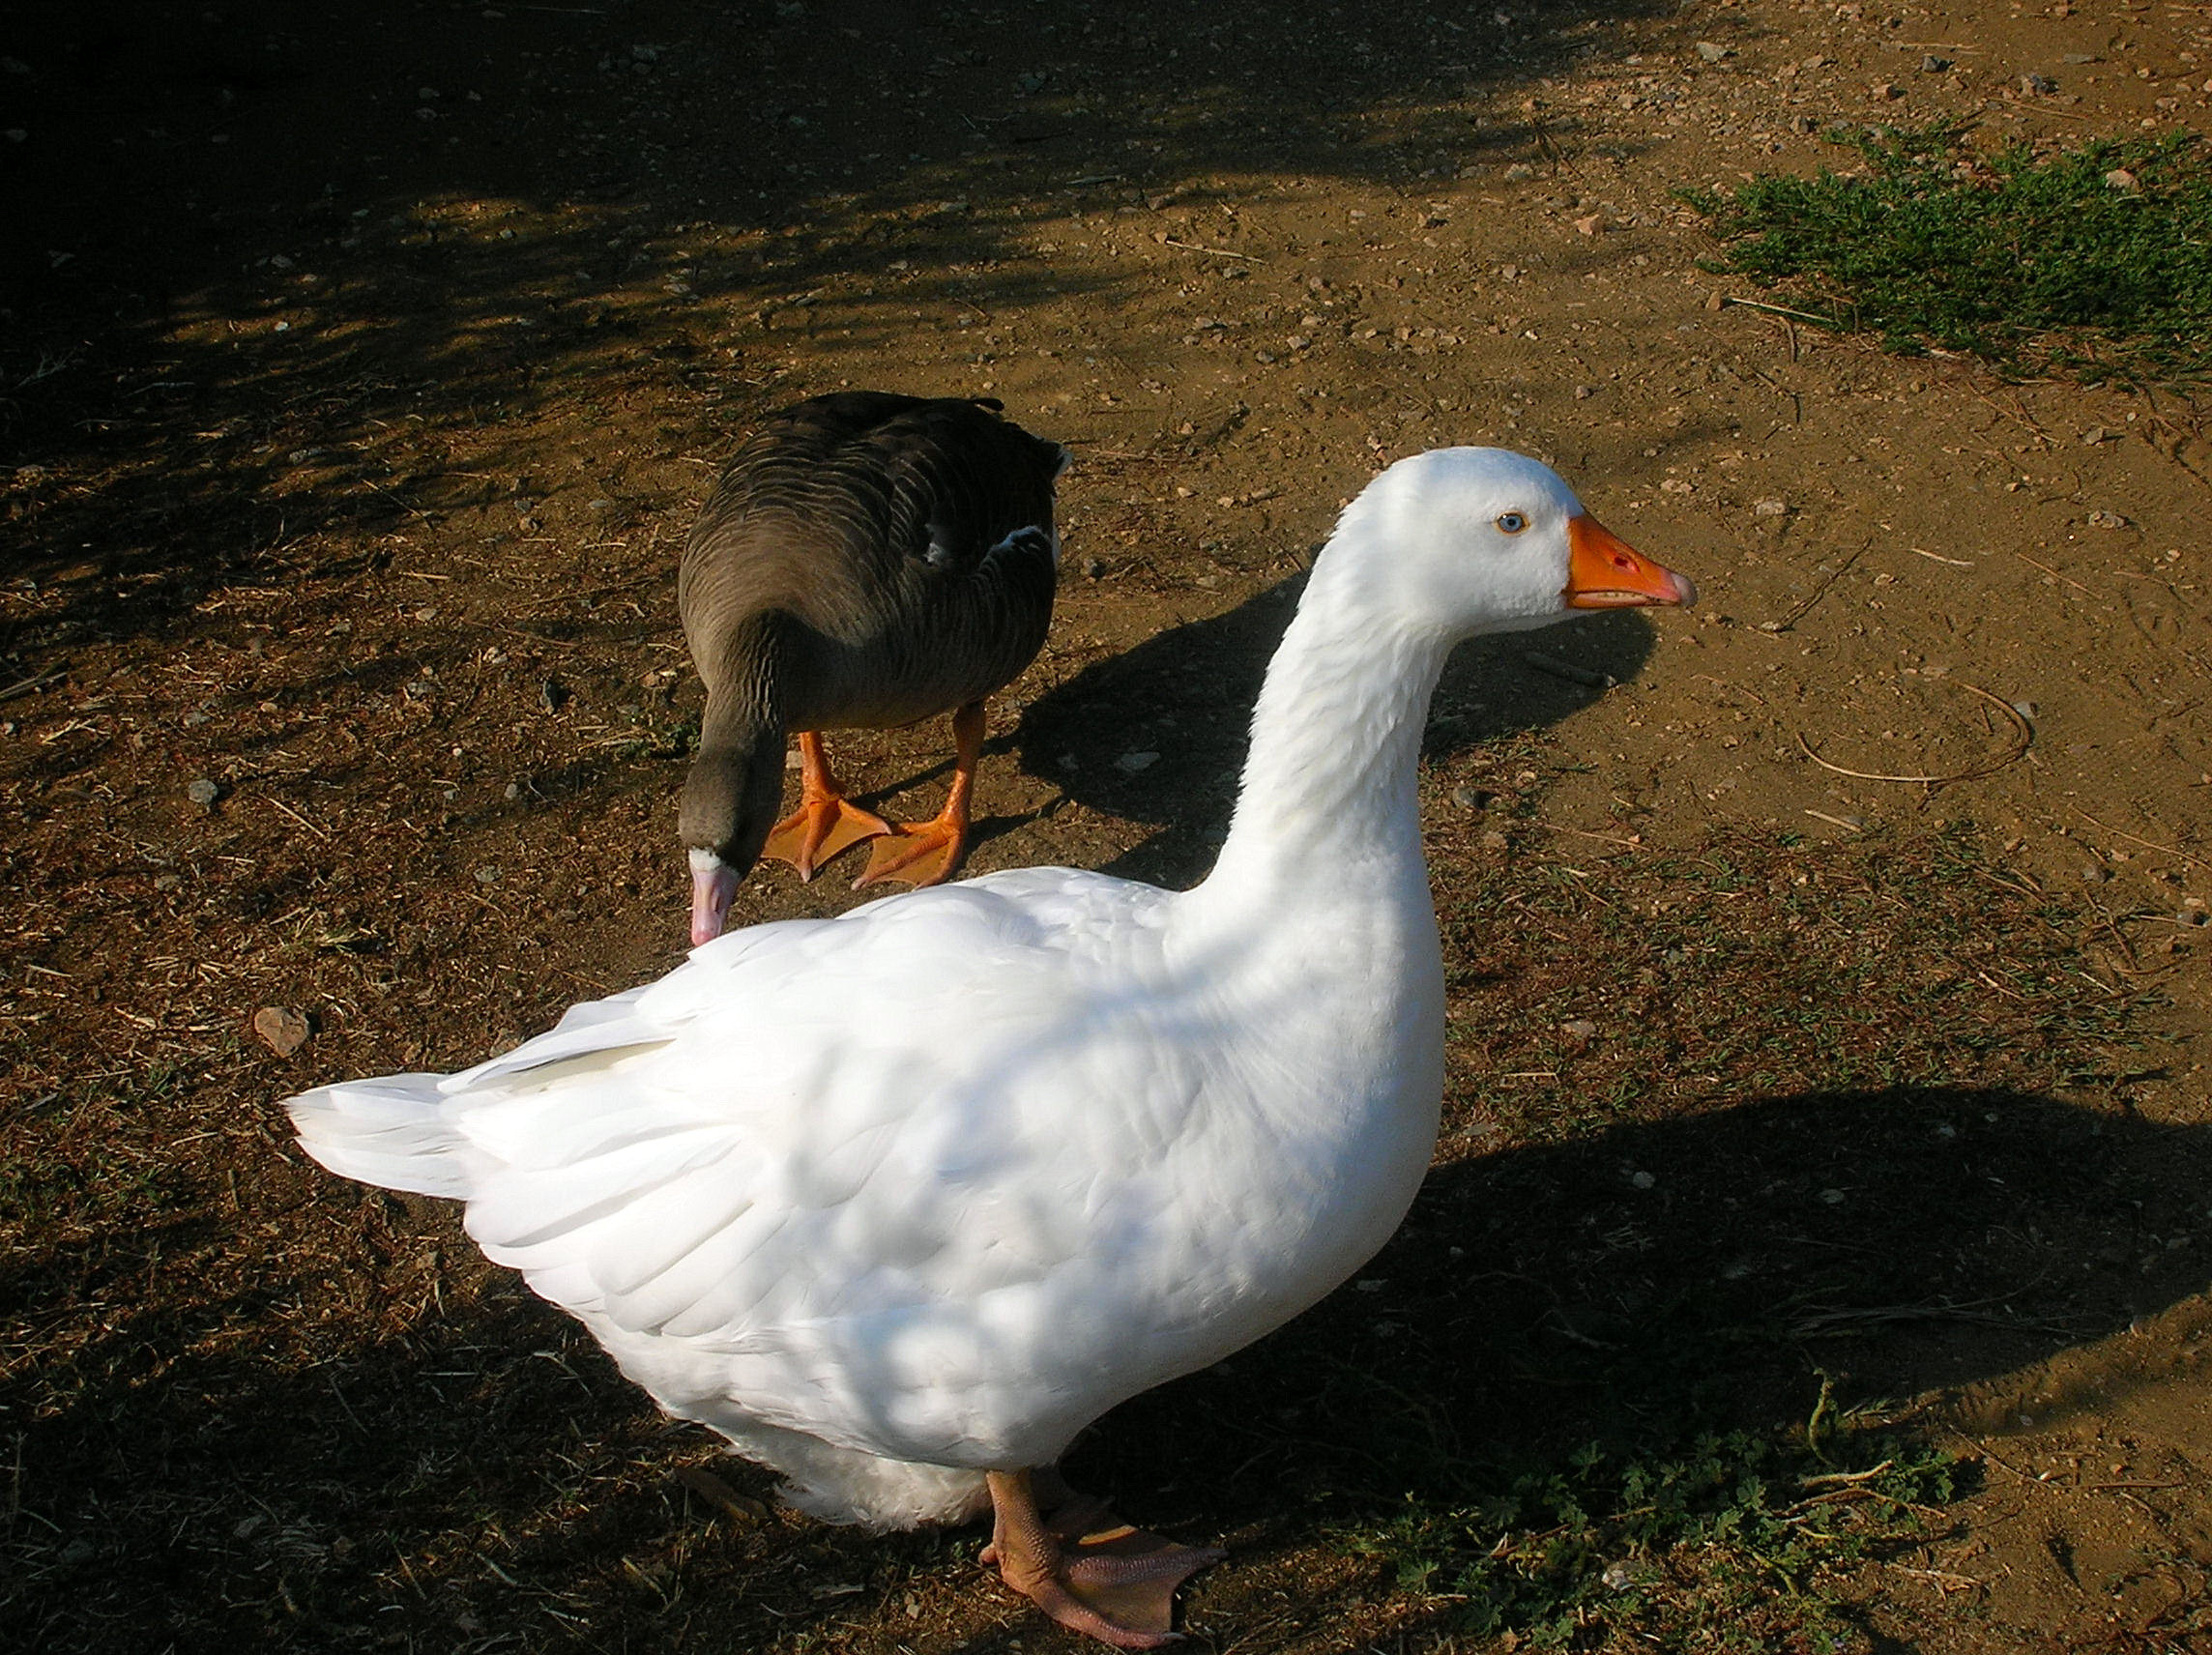 File:White goose.jpg - Wikimedia Commons